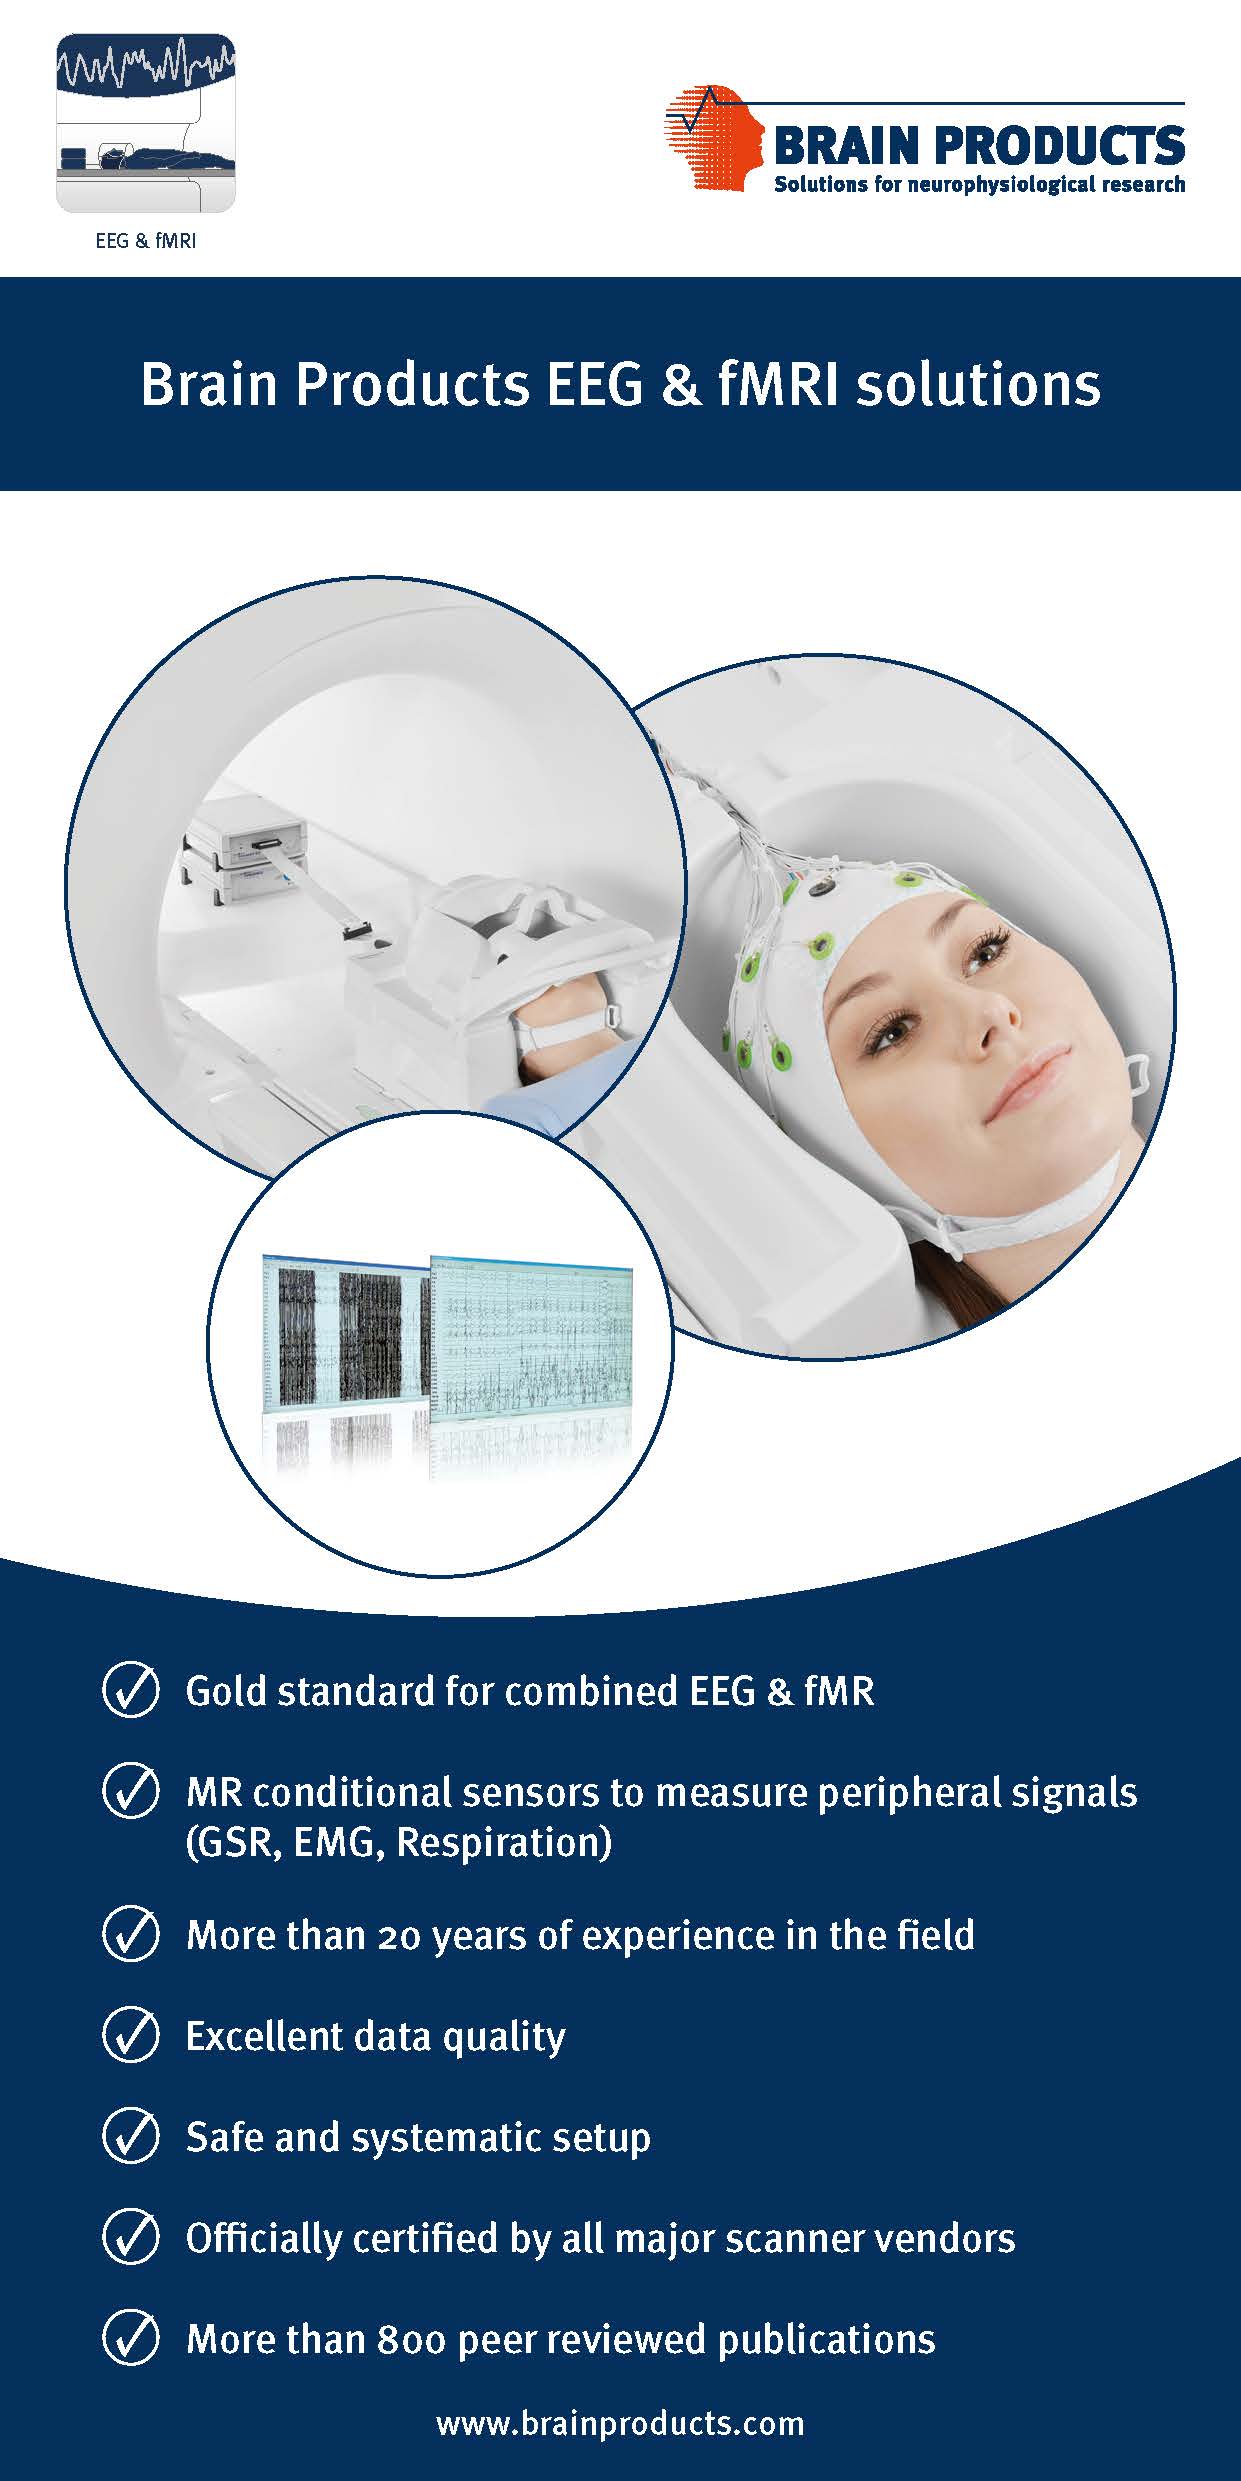 EEG & fMRI Solutions